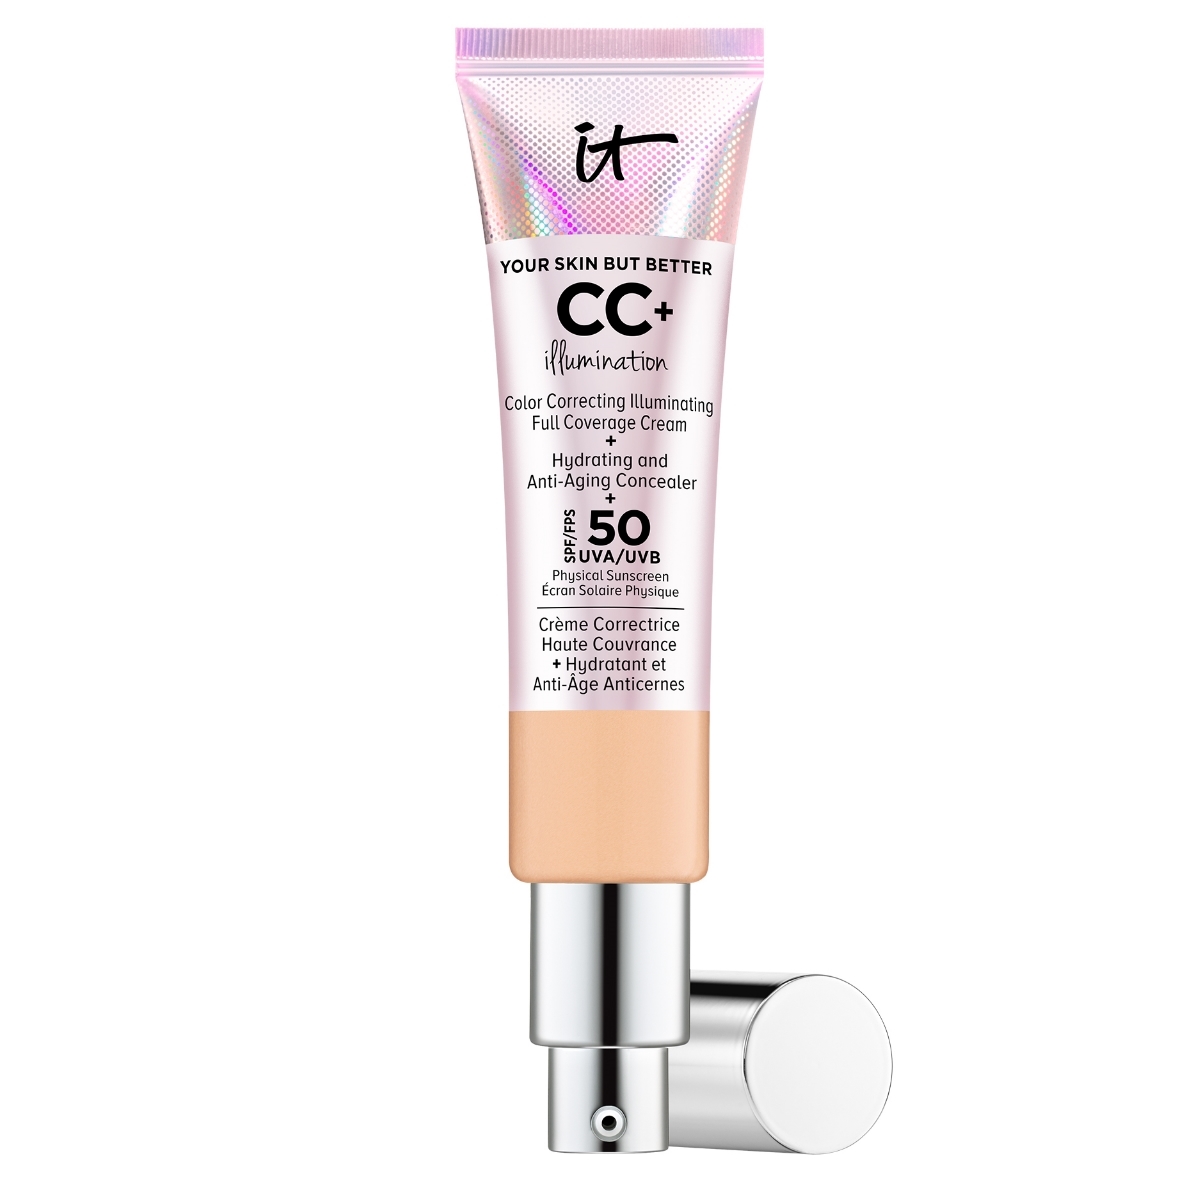 CC Cream + Illumination Your Skin But Better SPF 50+ de It Cosmetics.